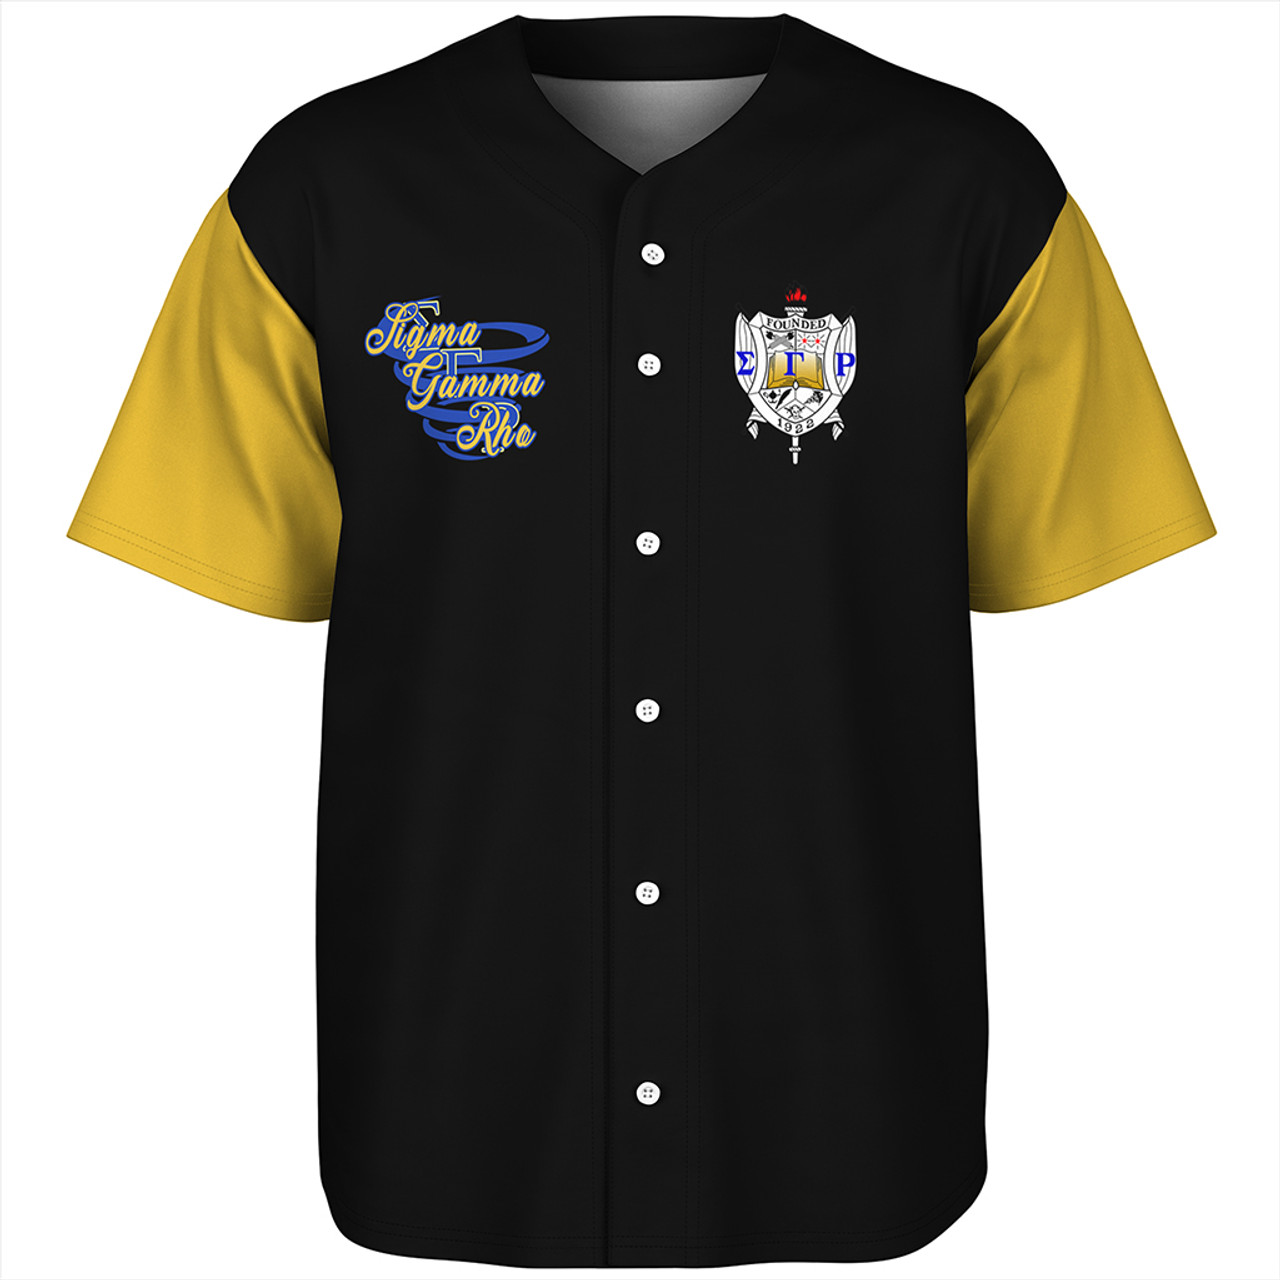 Sigma Gamma Rho Baseball Shirt I Am Rho Girl